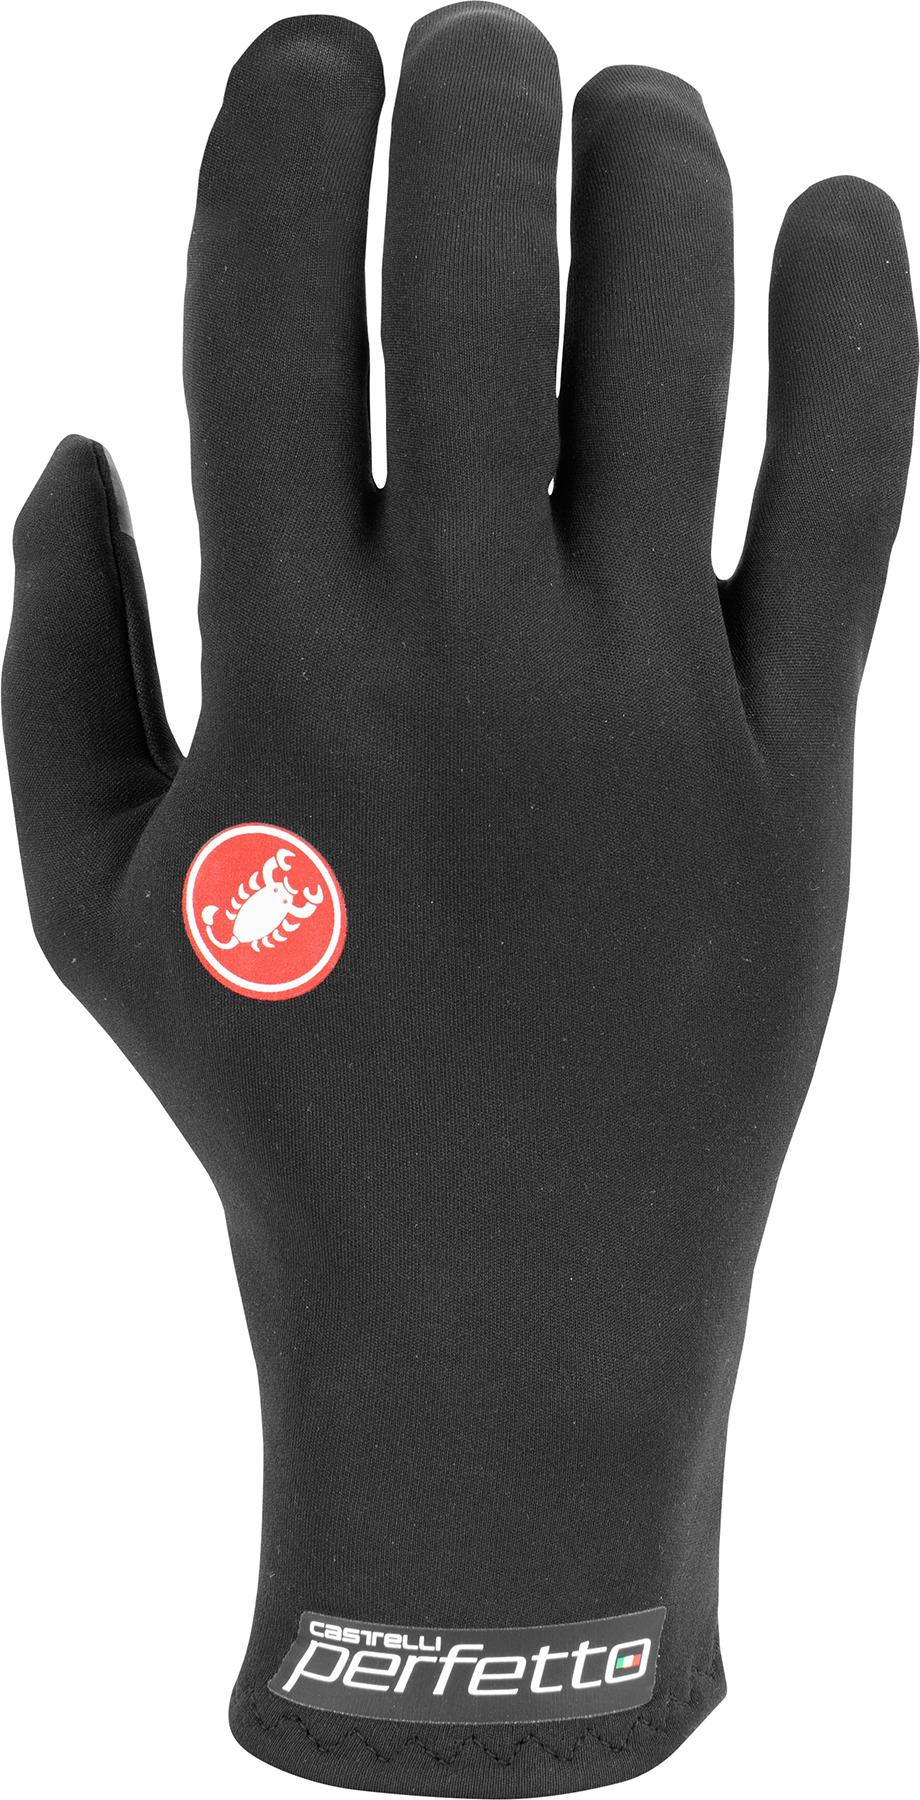 Castelli Perfetto Ros Gloves  Black